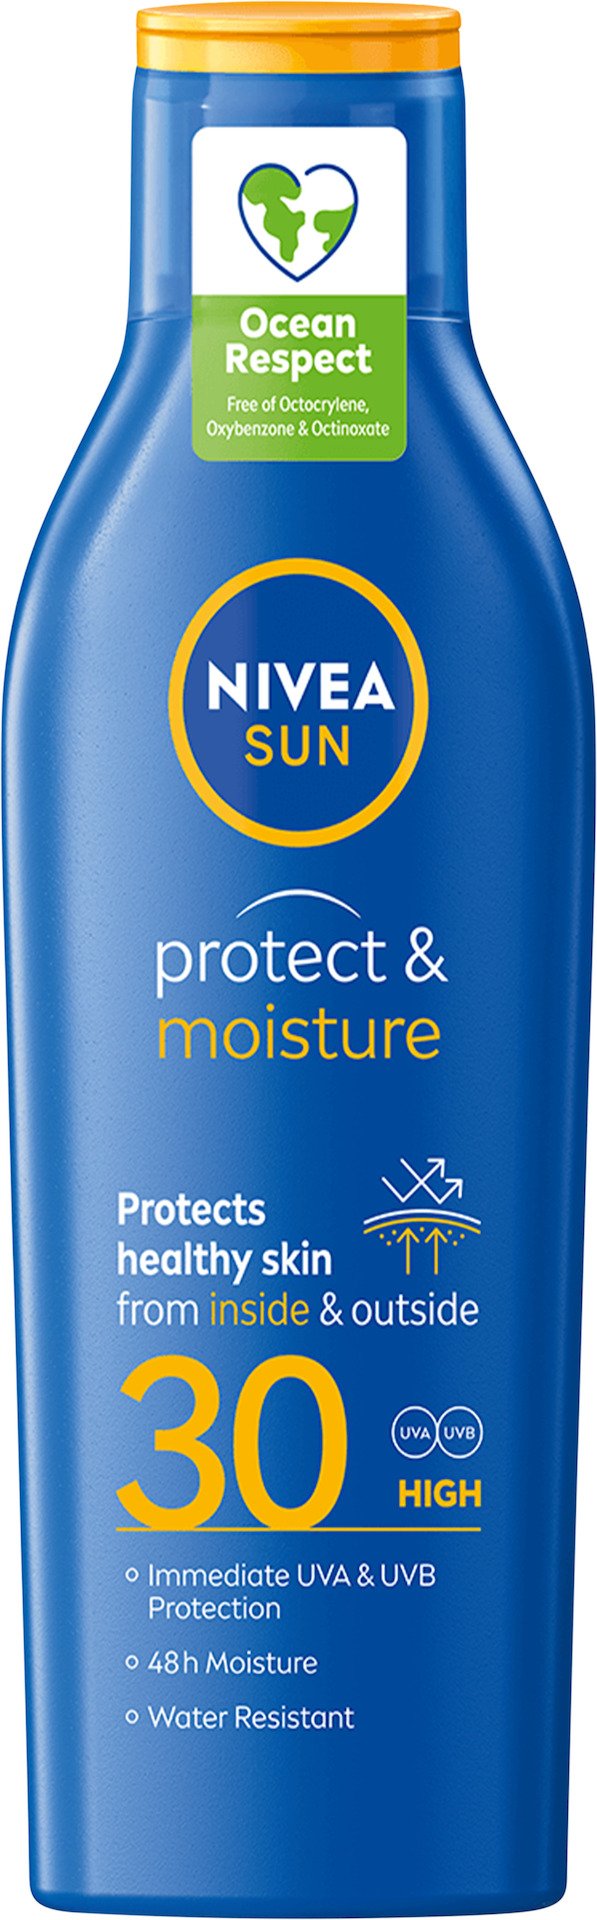 NIVEA SUN Protect & Moisture SPF30 Sun Lotion 200 ml